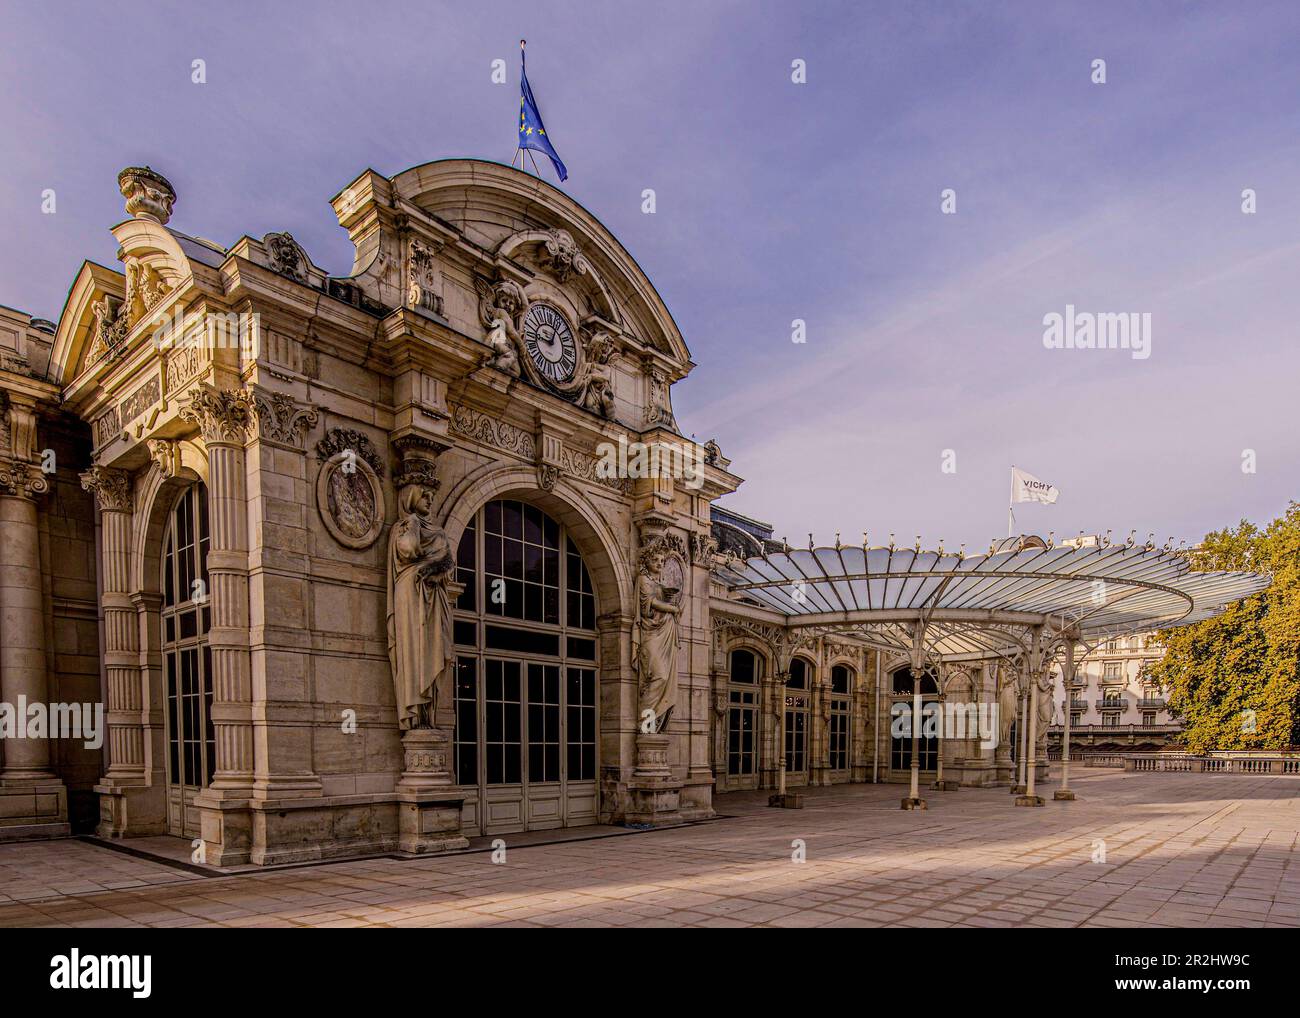 Palais des Congres - Opera, Vichy, Auvergne-Rhone-Alpes, France Stock Photo